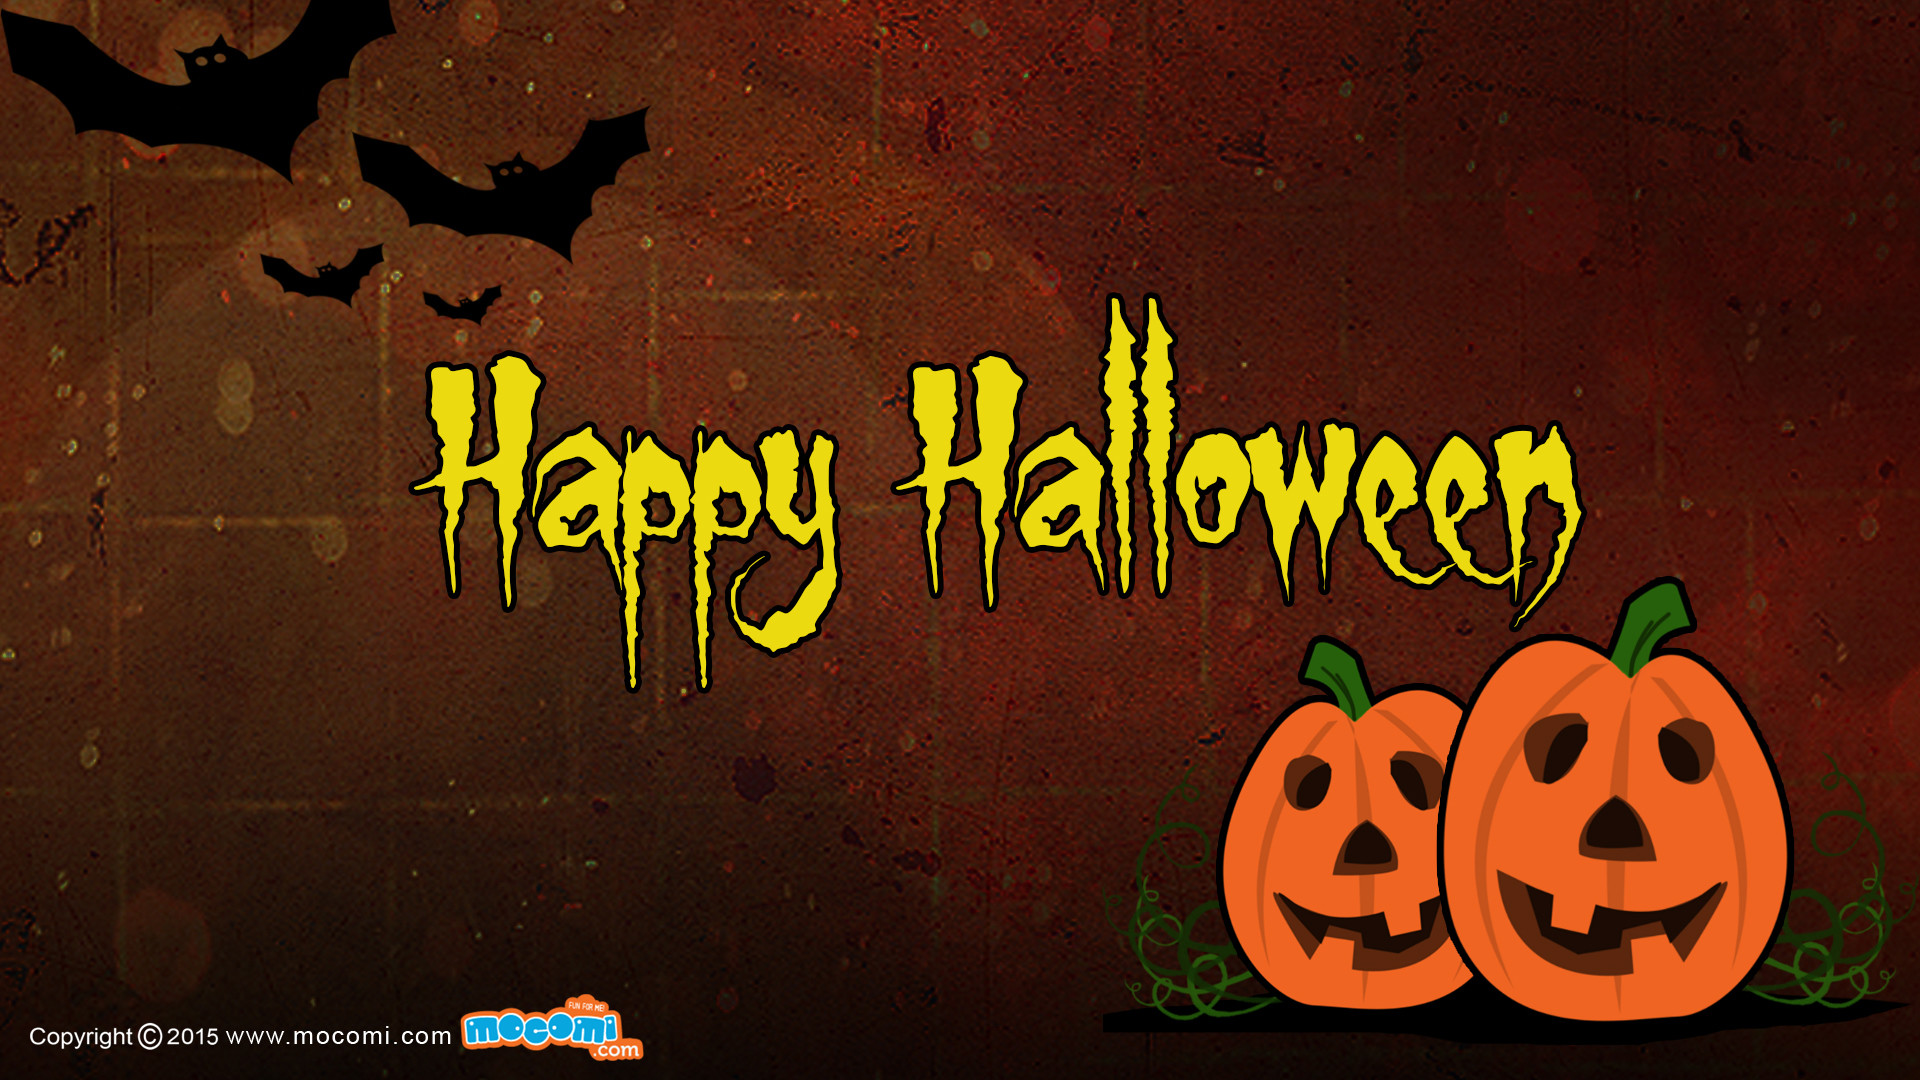 A happy halloween greeting card with pumpkins and bats - Halloween desktop